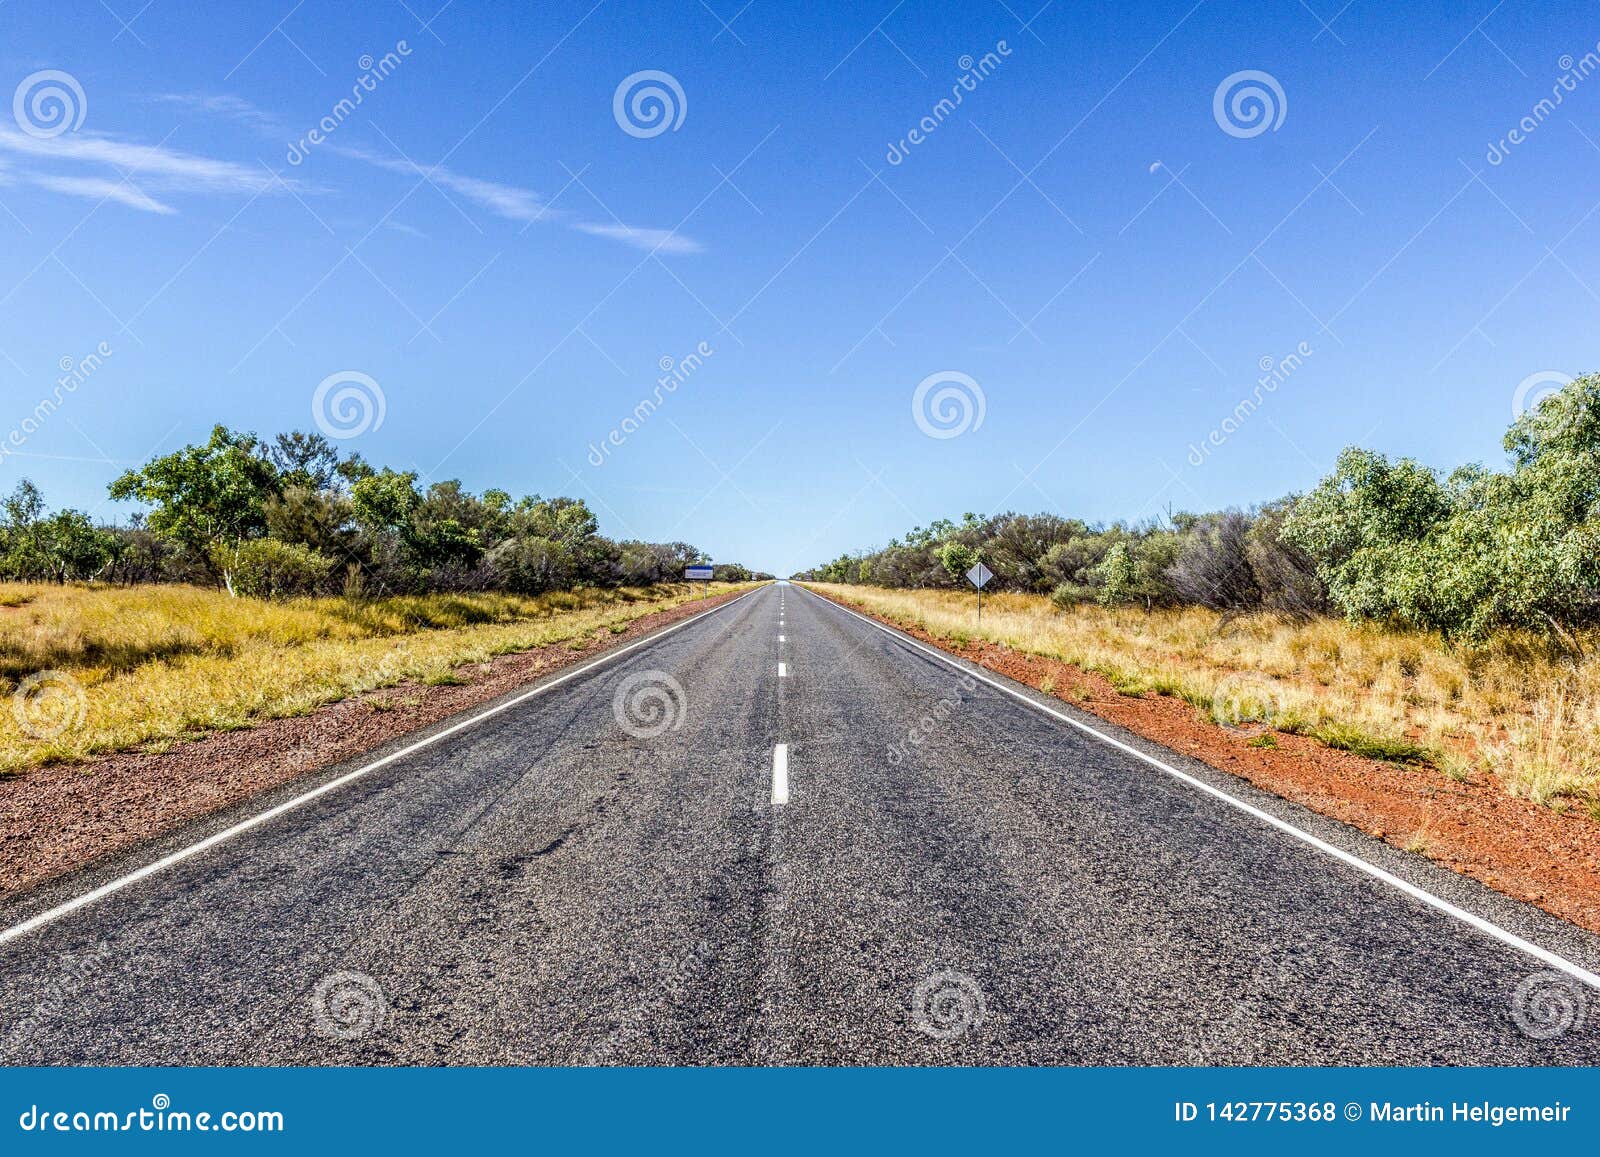 straight road through the dessert of australia, south australia, stuart highway australia